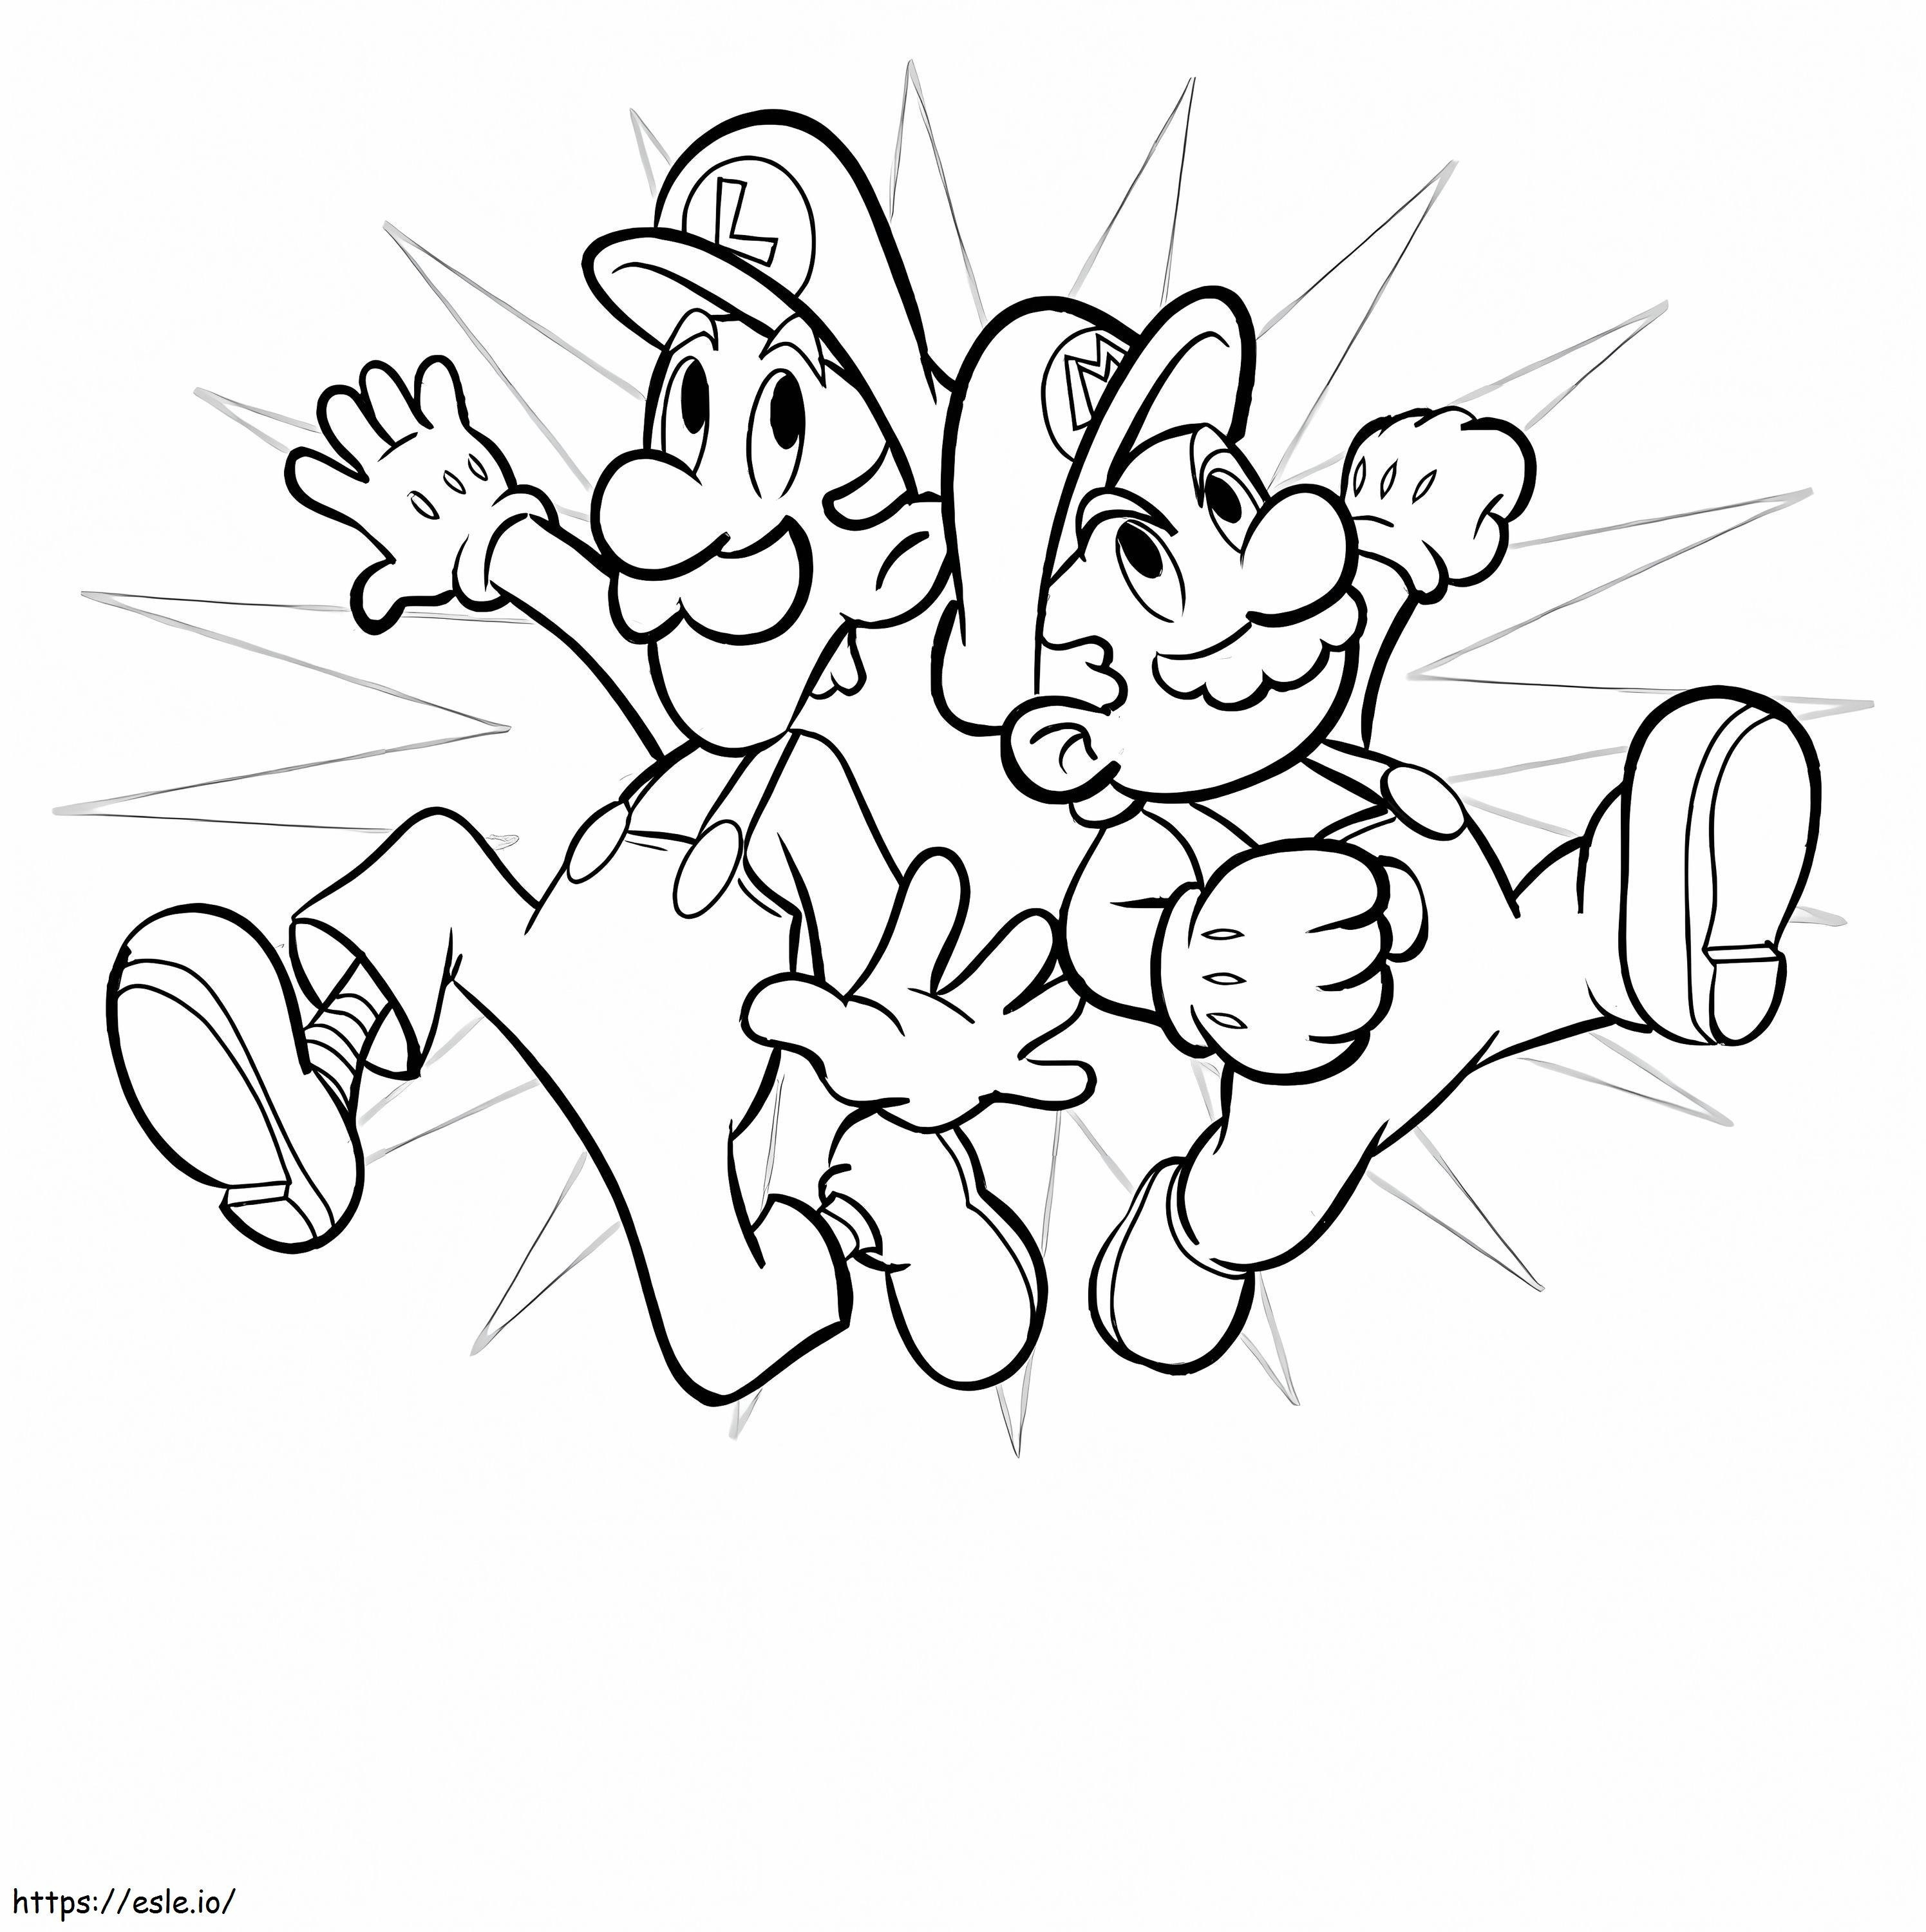 Coloriage Gentil Luigi et Mario à imprimer dessin